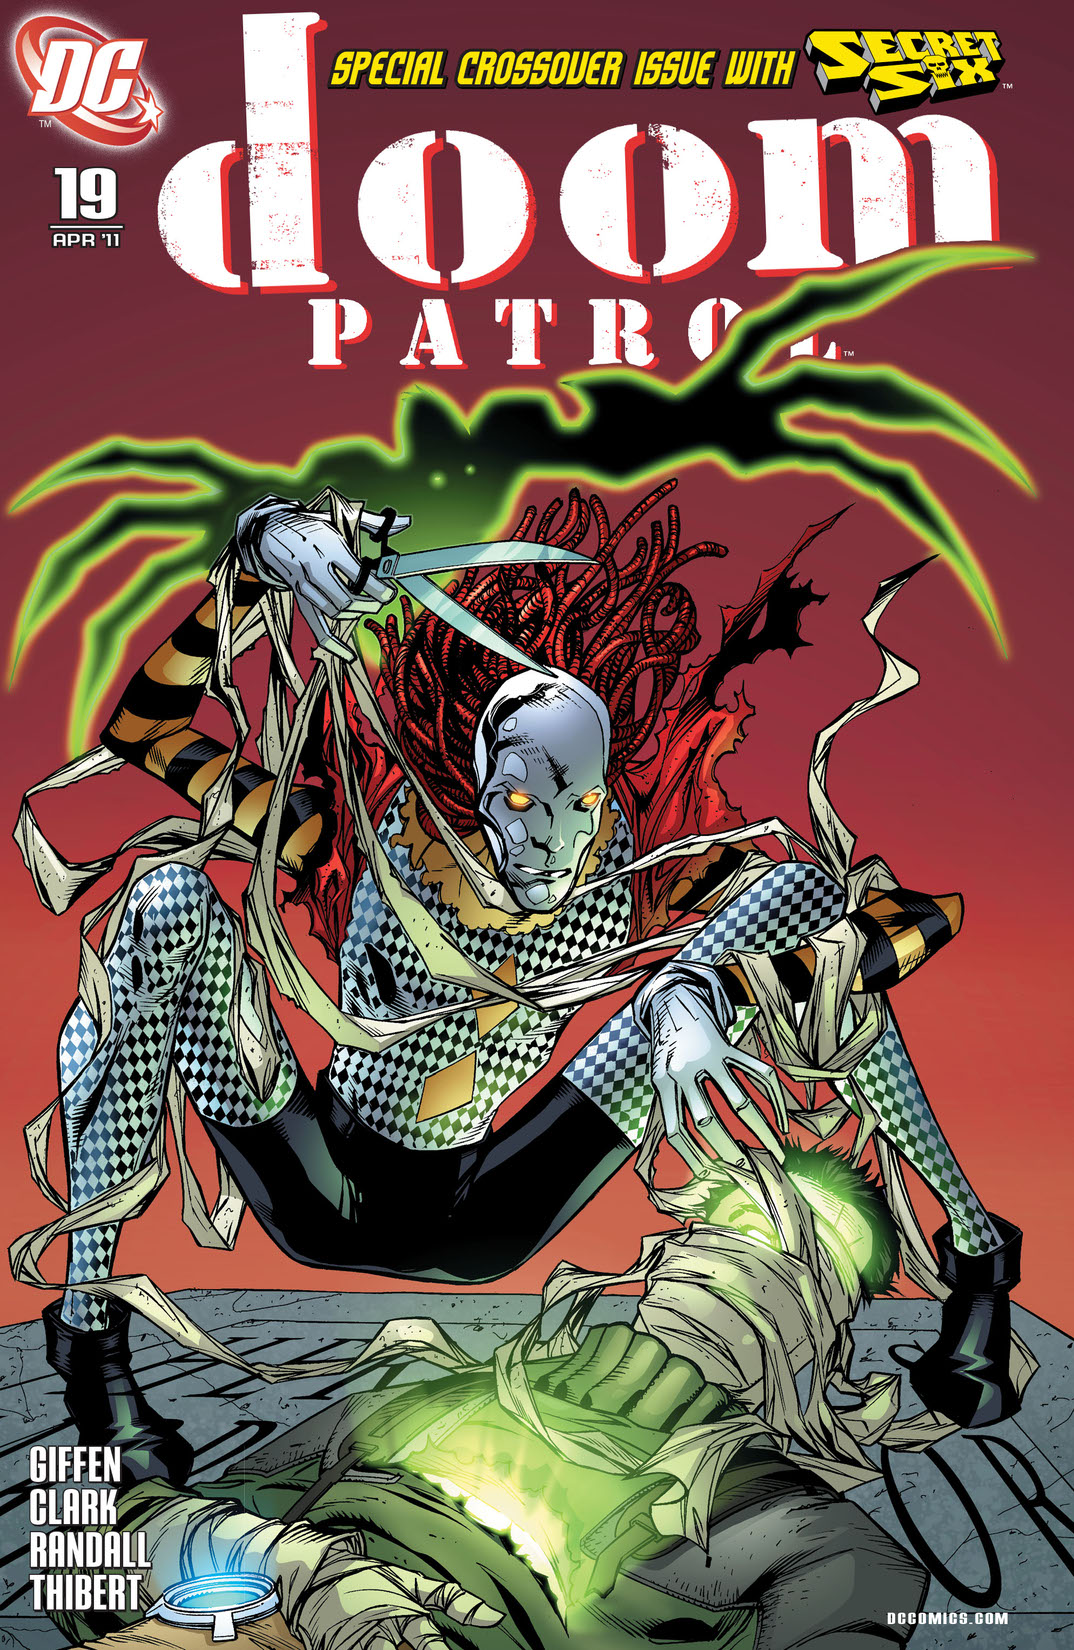 Doom Patrol (2009-) #19 preview images